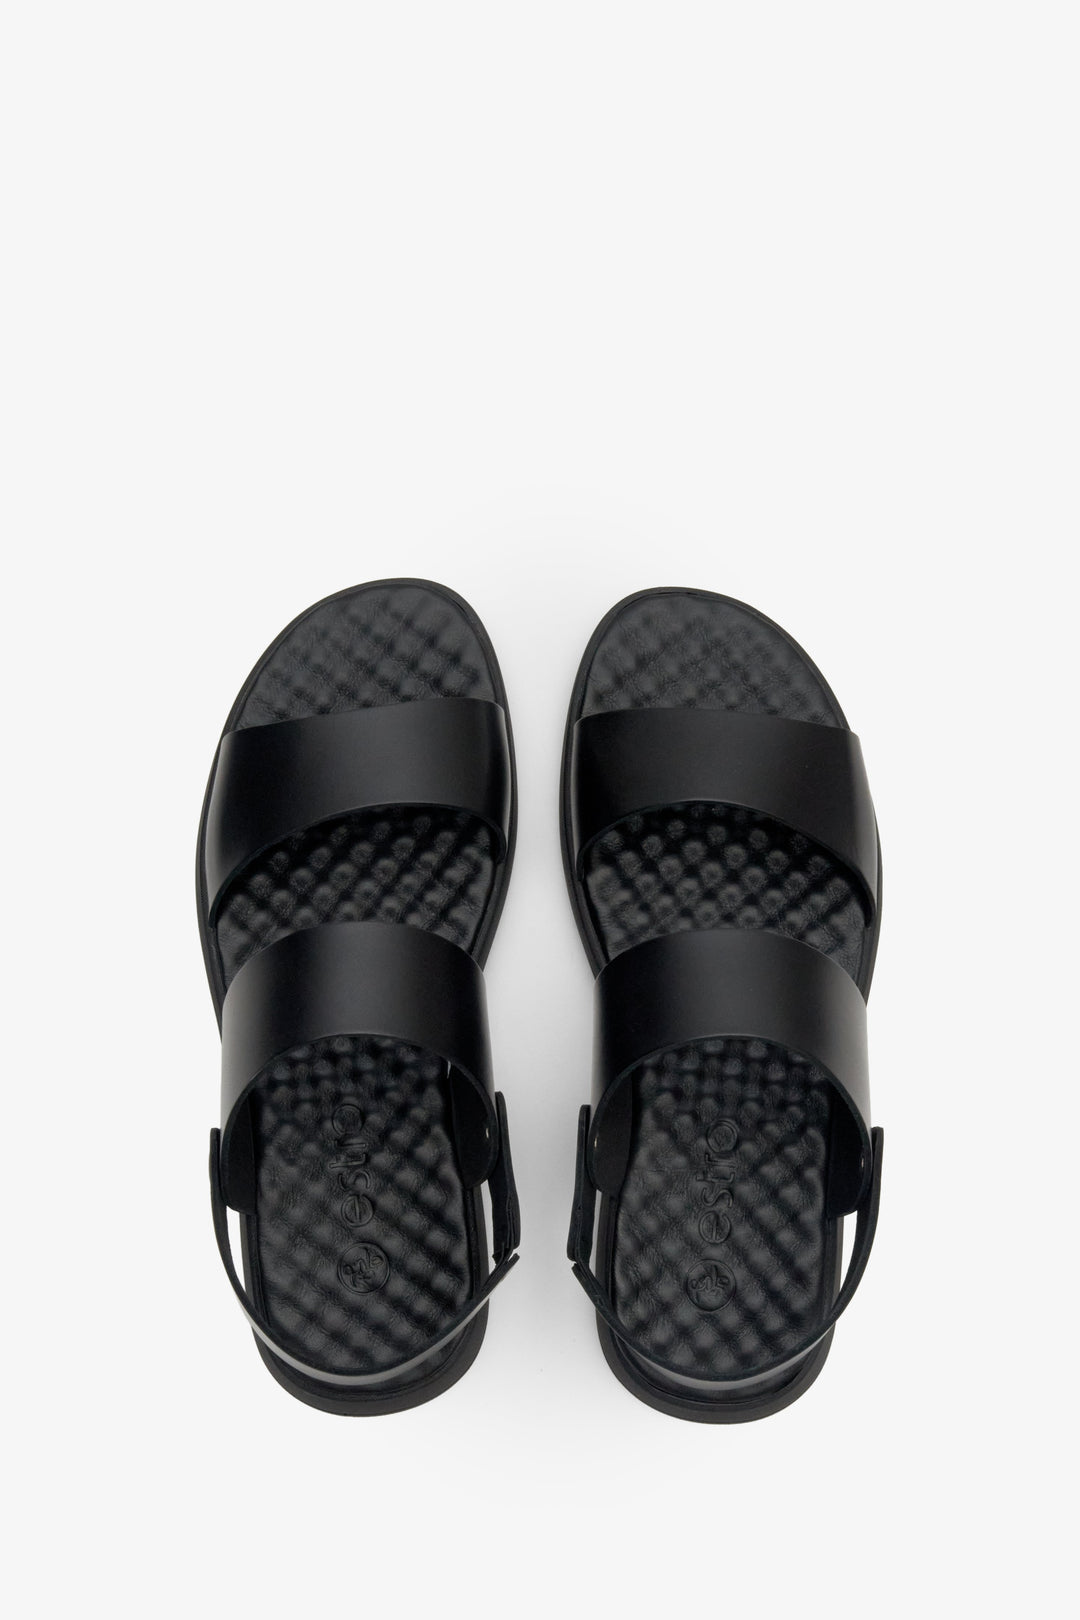 Męskie sandały czarne na lato ze skóry naturalnej, marka Estro - prezentacja modelu z góry.